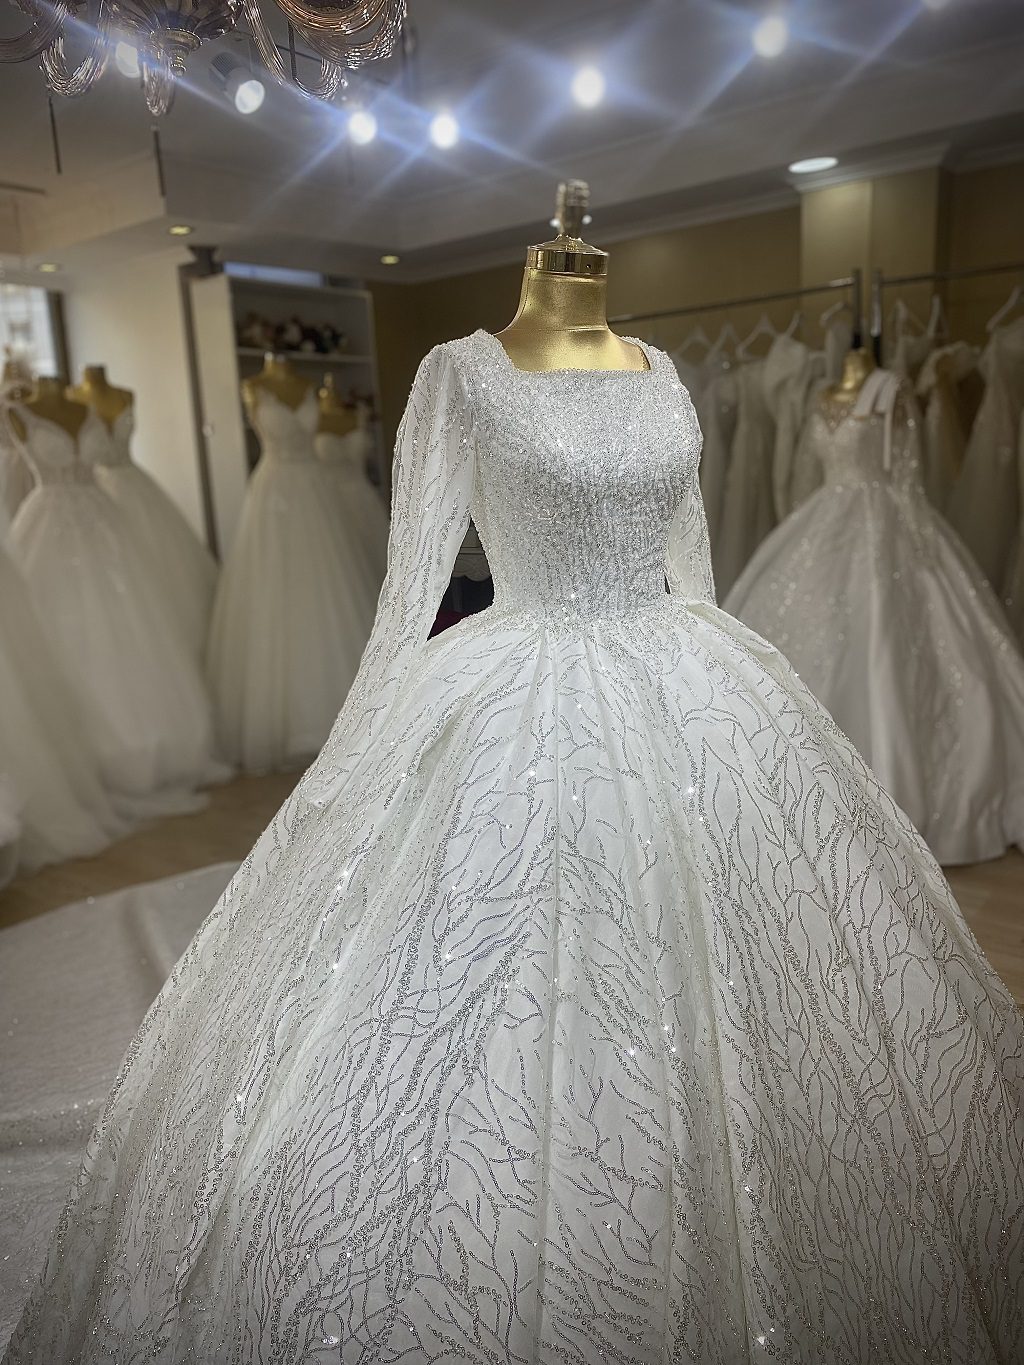 Briella - wholesale wedding dress - detail